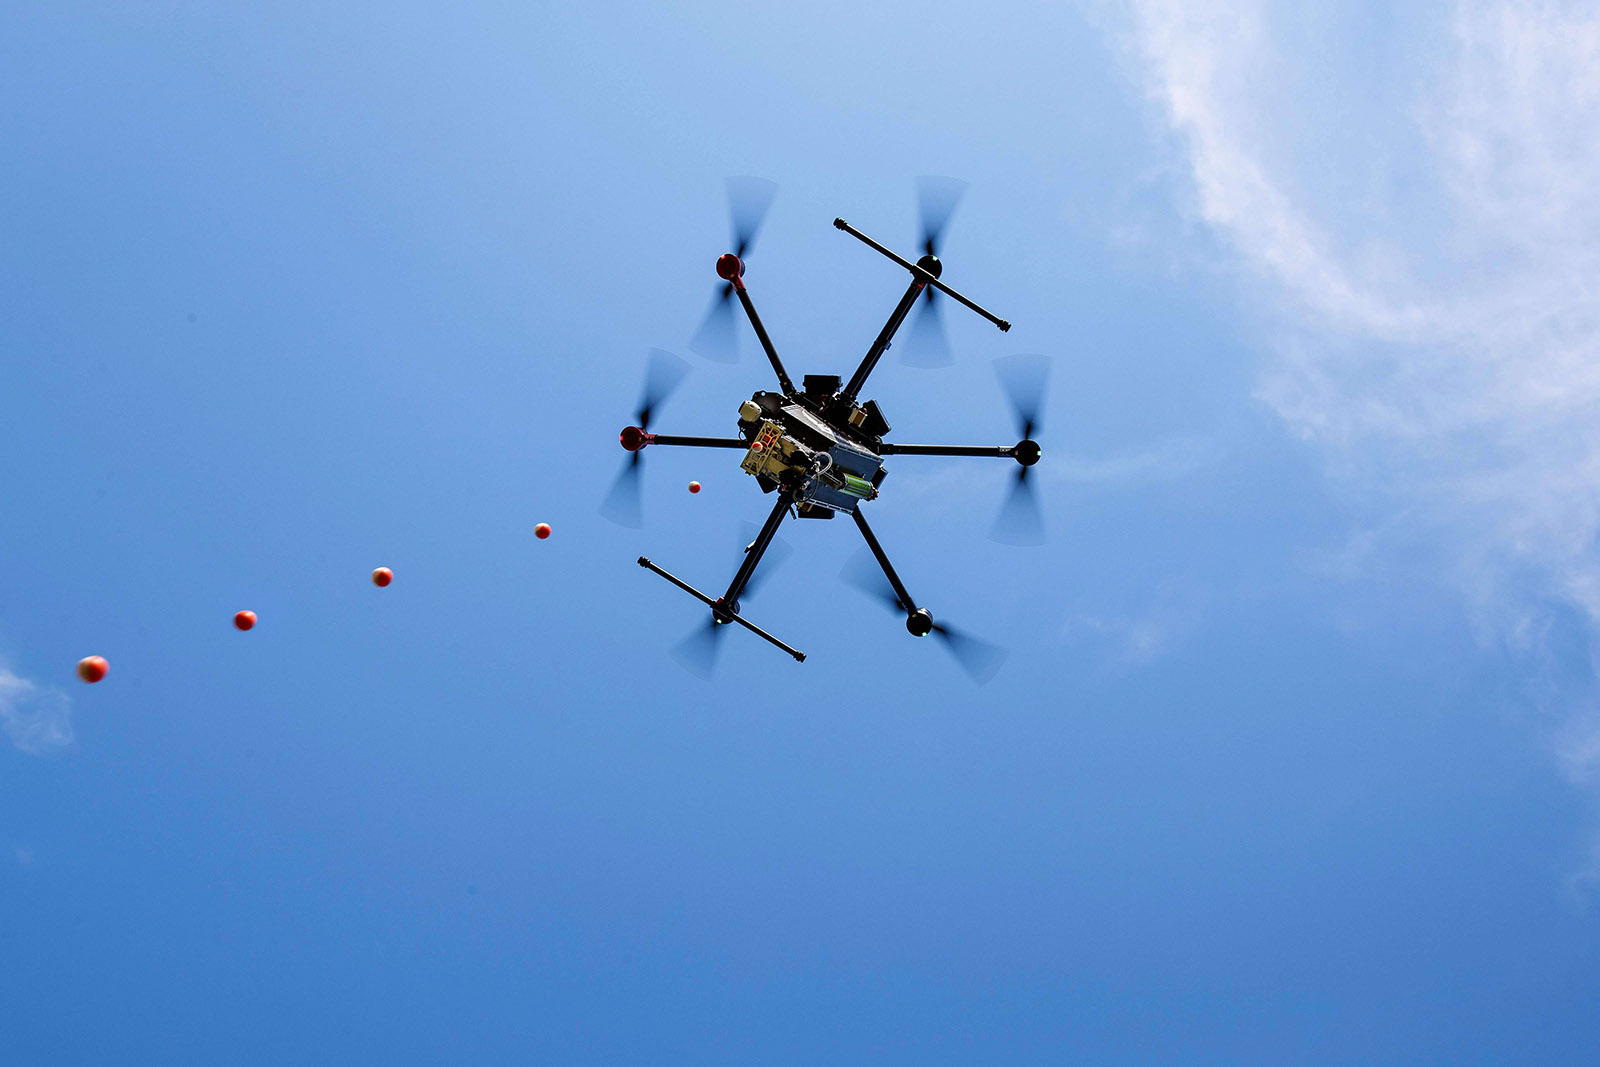 Ignus drone dropping spheres.